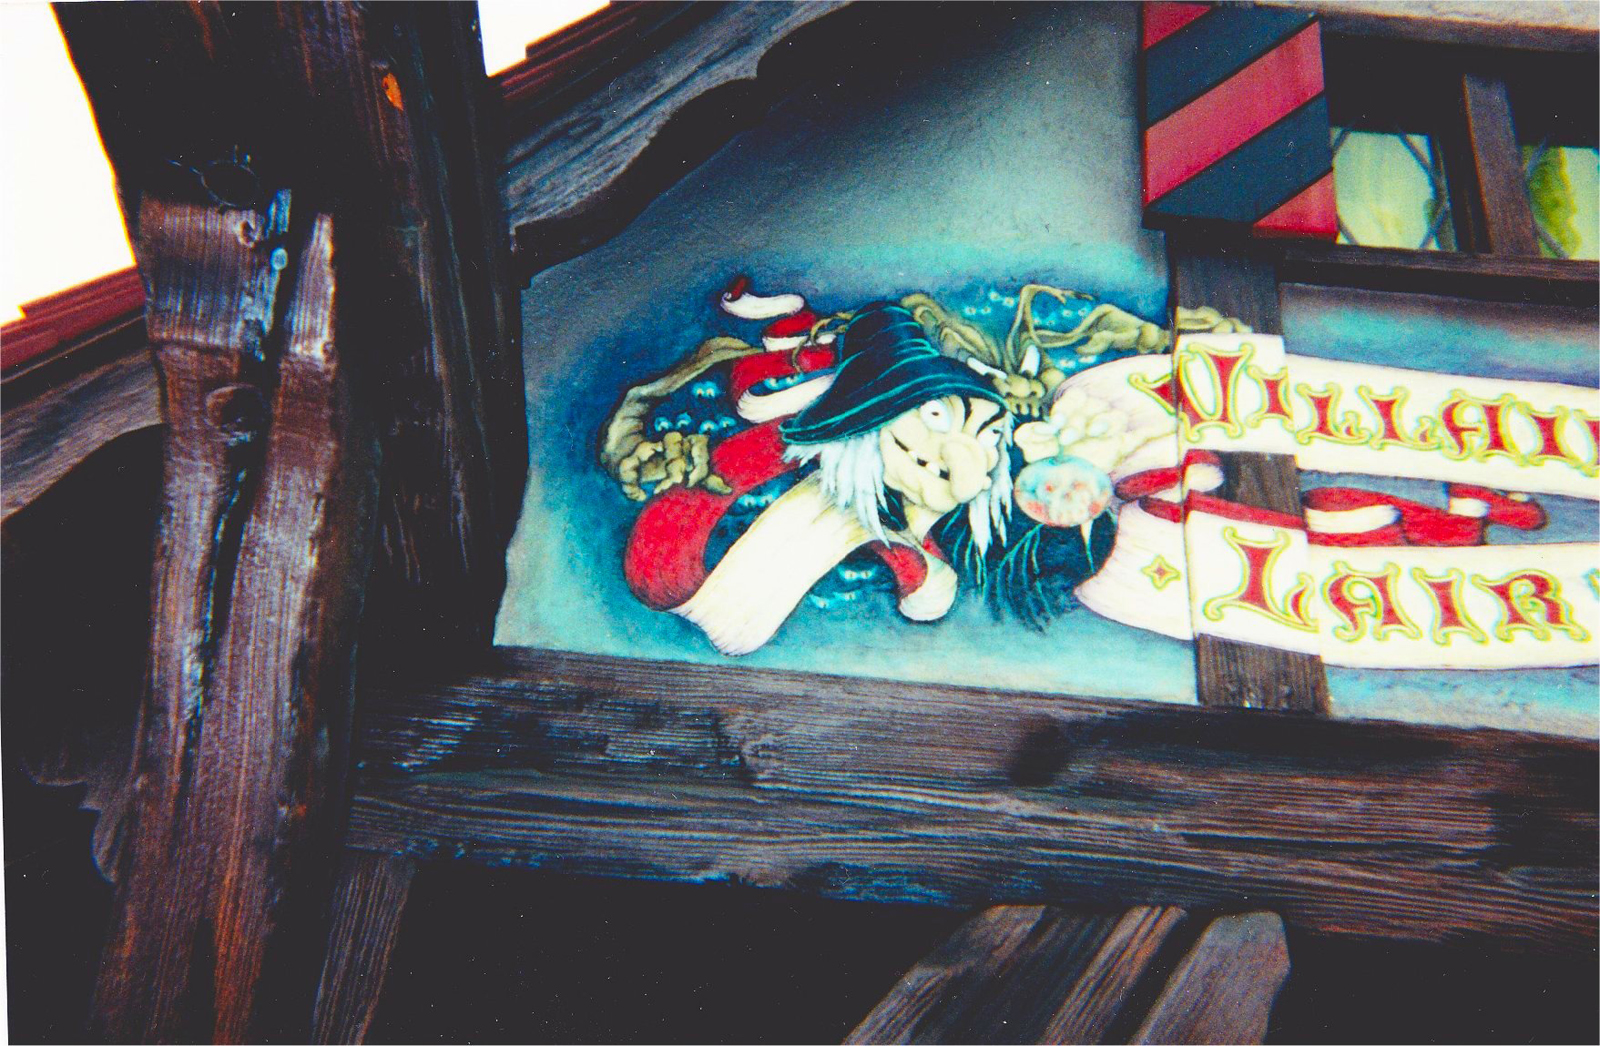 DisneyVillainsStore1999.jpg